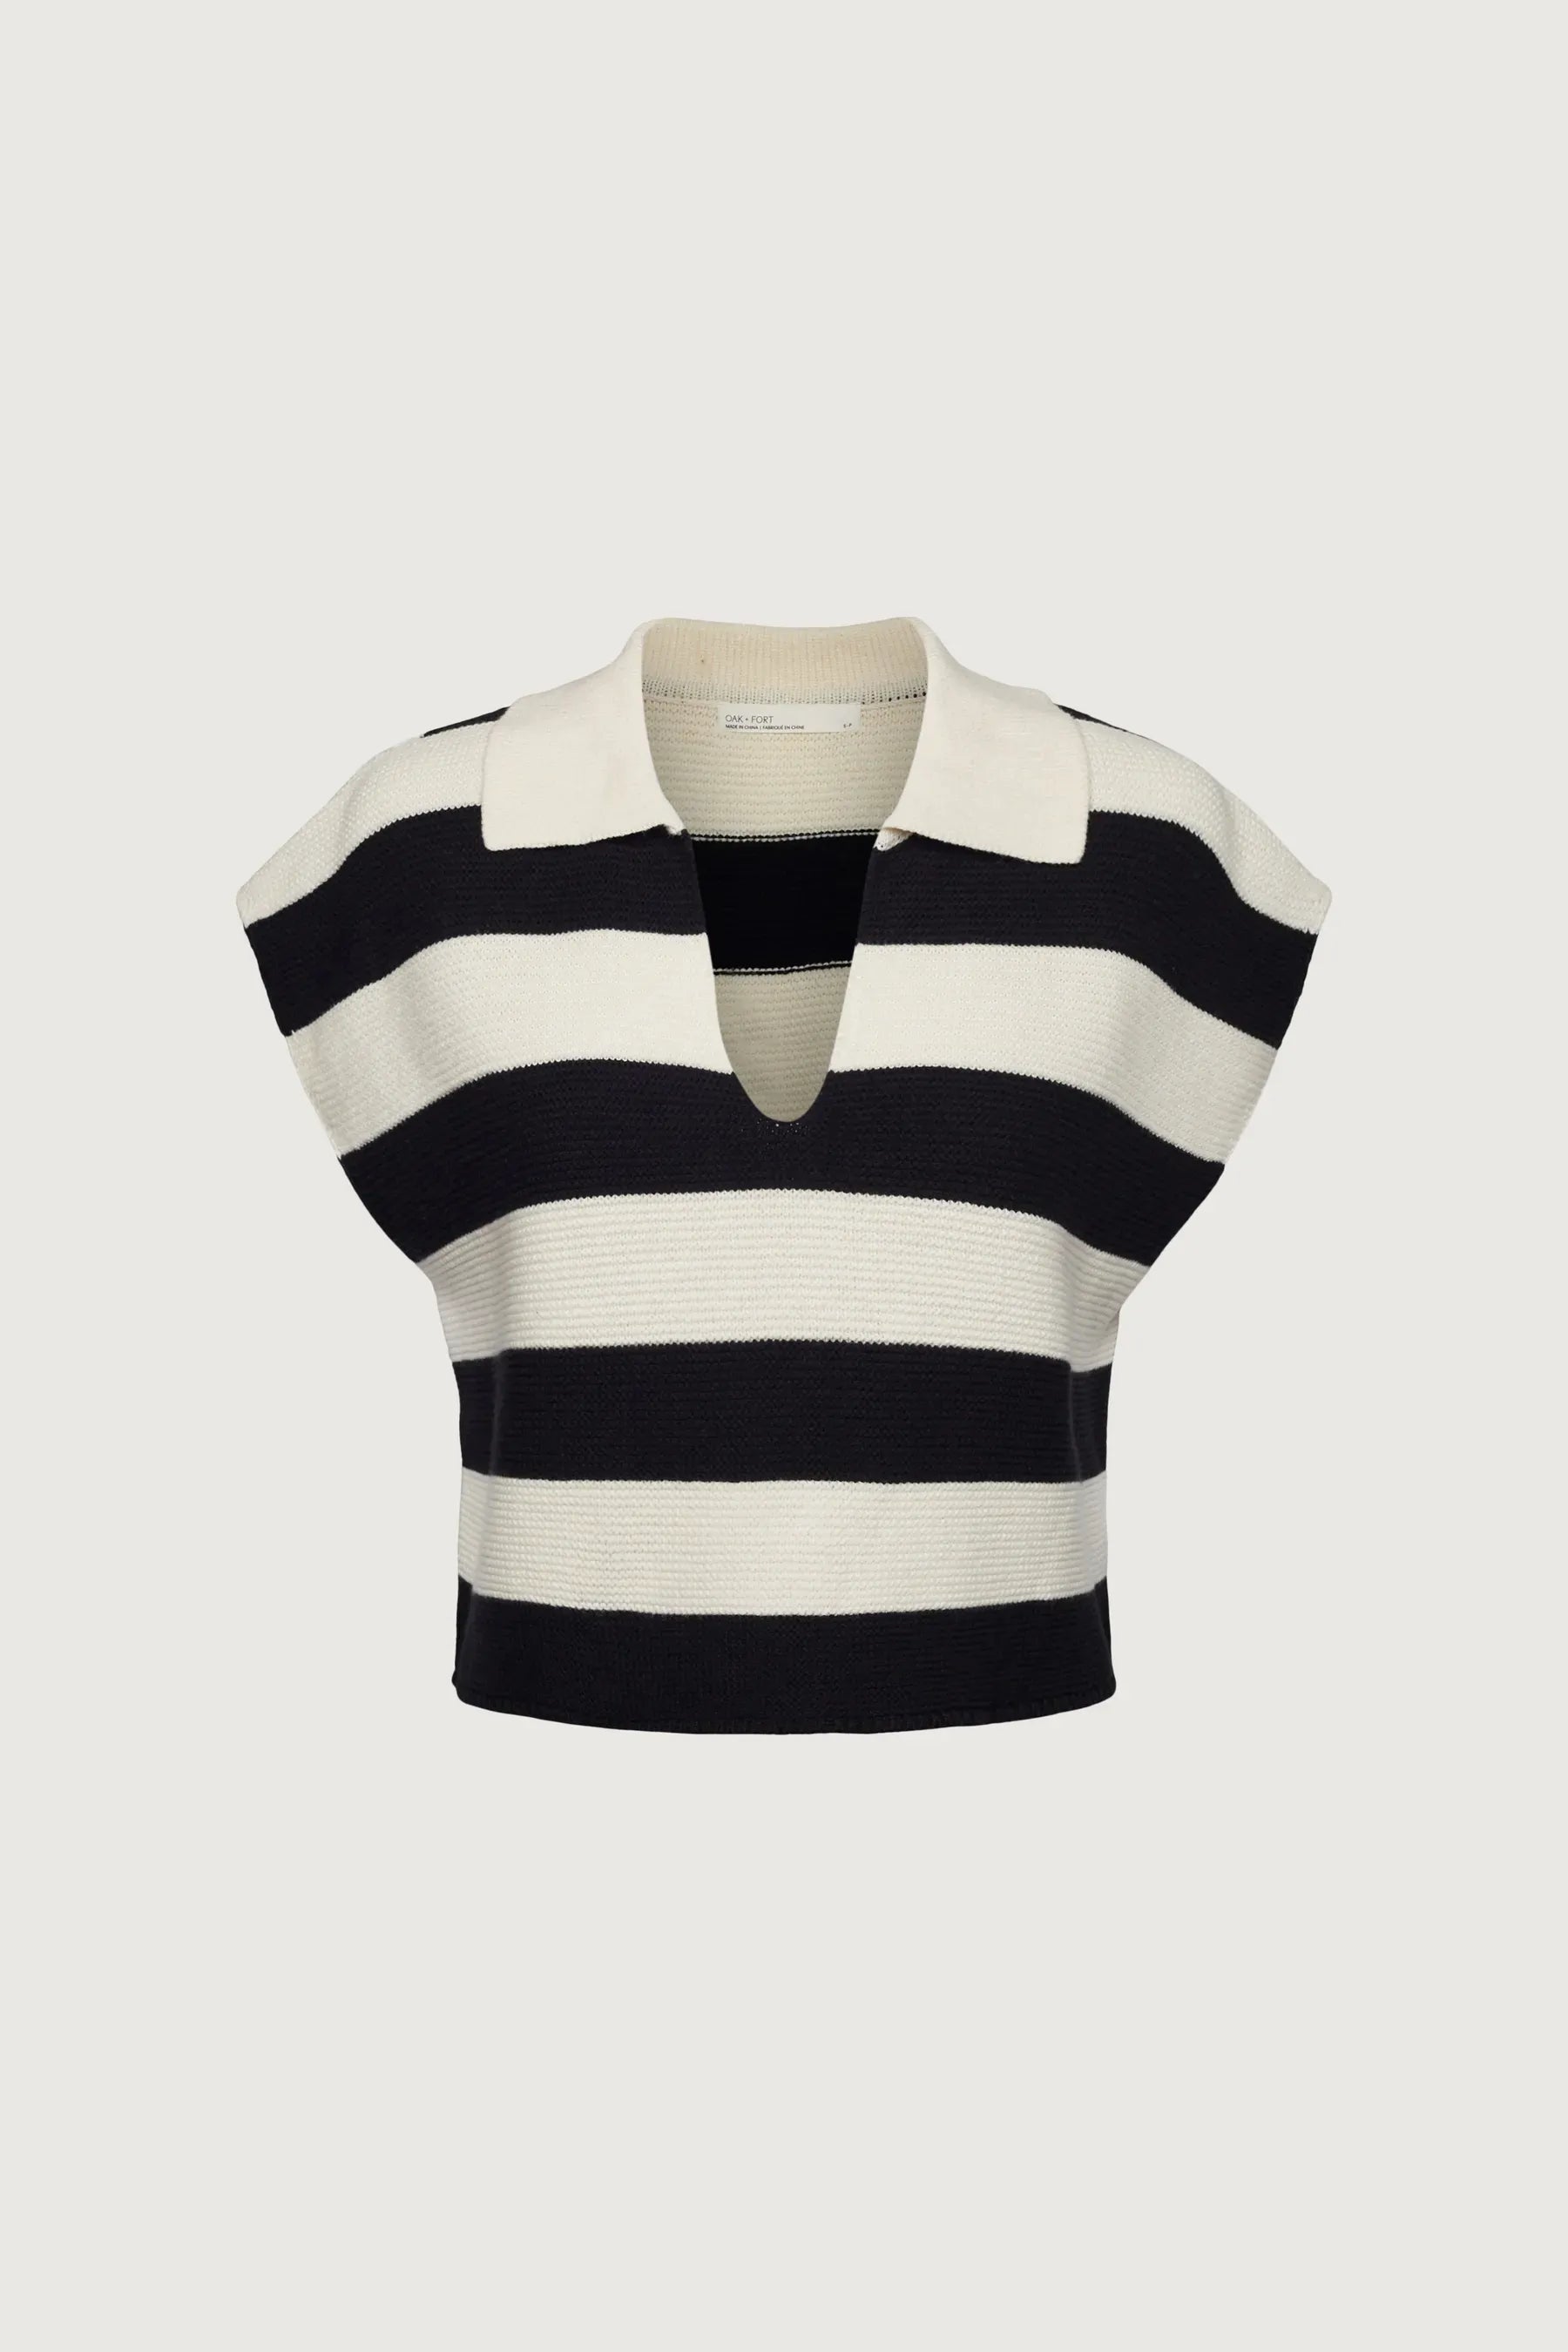 Cropped Striped Collared Sweater - Cream Black